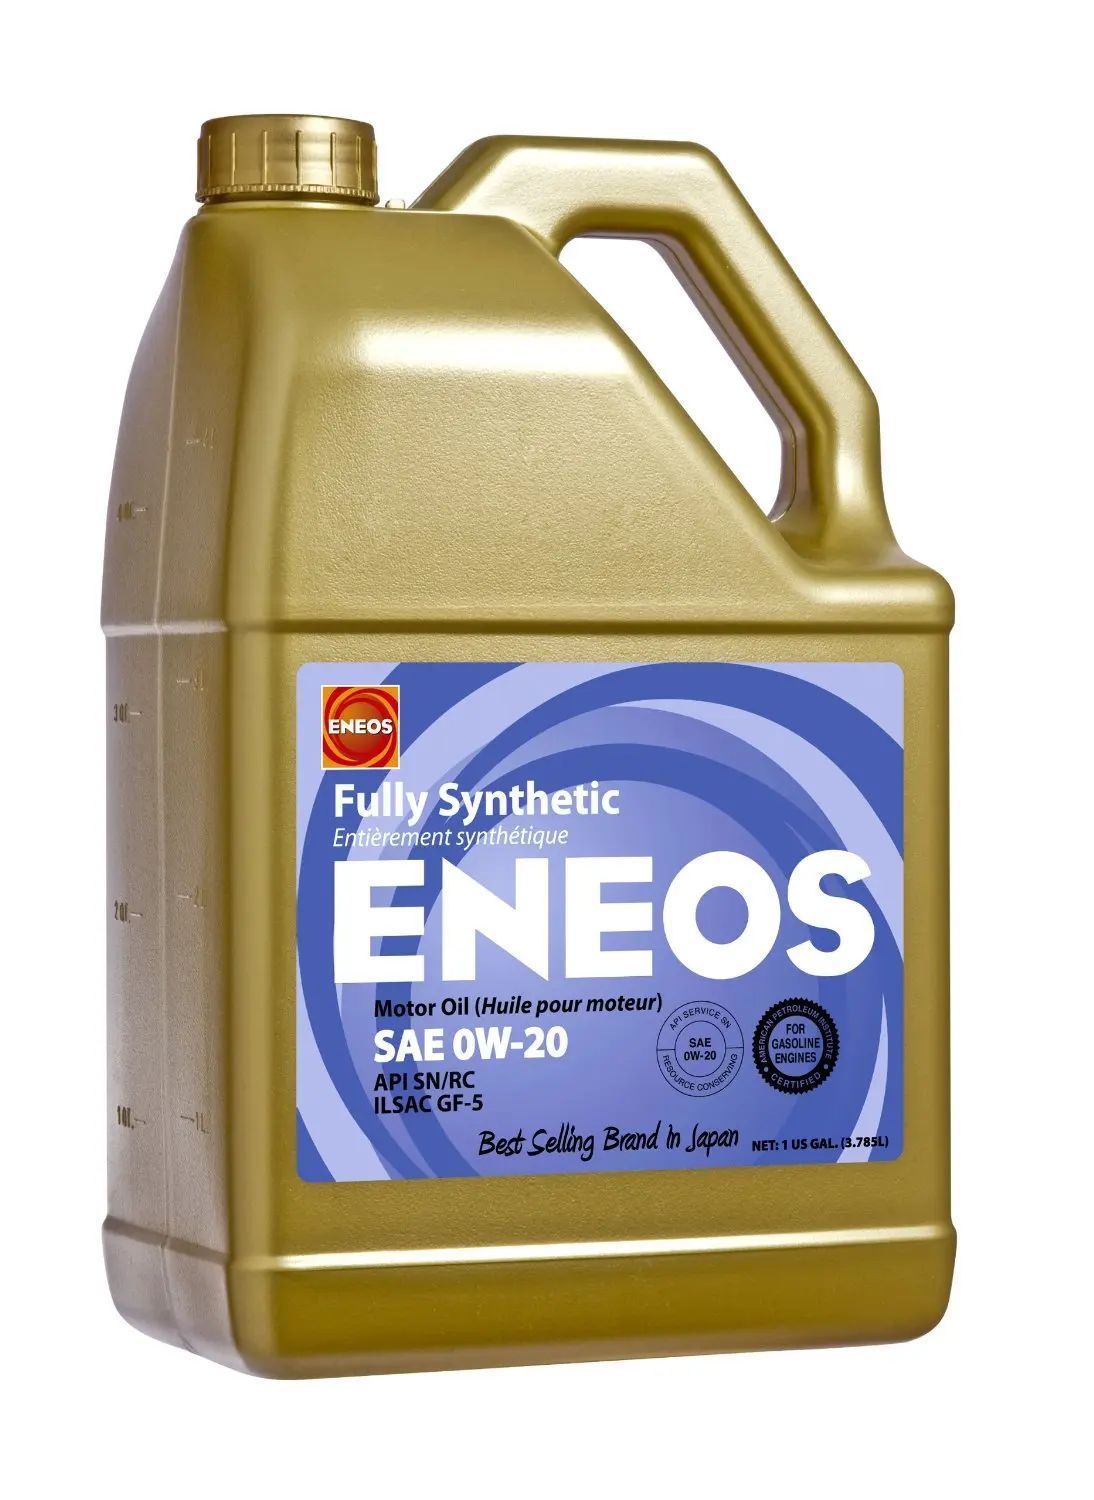 Gf 5 купить. Fully Synthetic 5w30 ENEOS. Масло моторное fully-Synthetic SN/gf-5. Масло API SN/gf5. Моторное масло енеос 5w30 допуски.